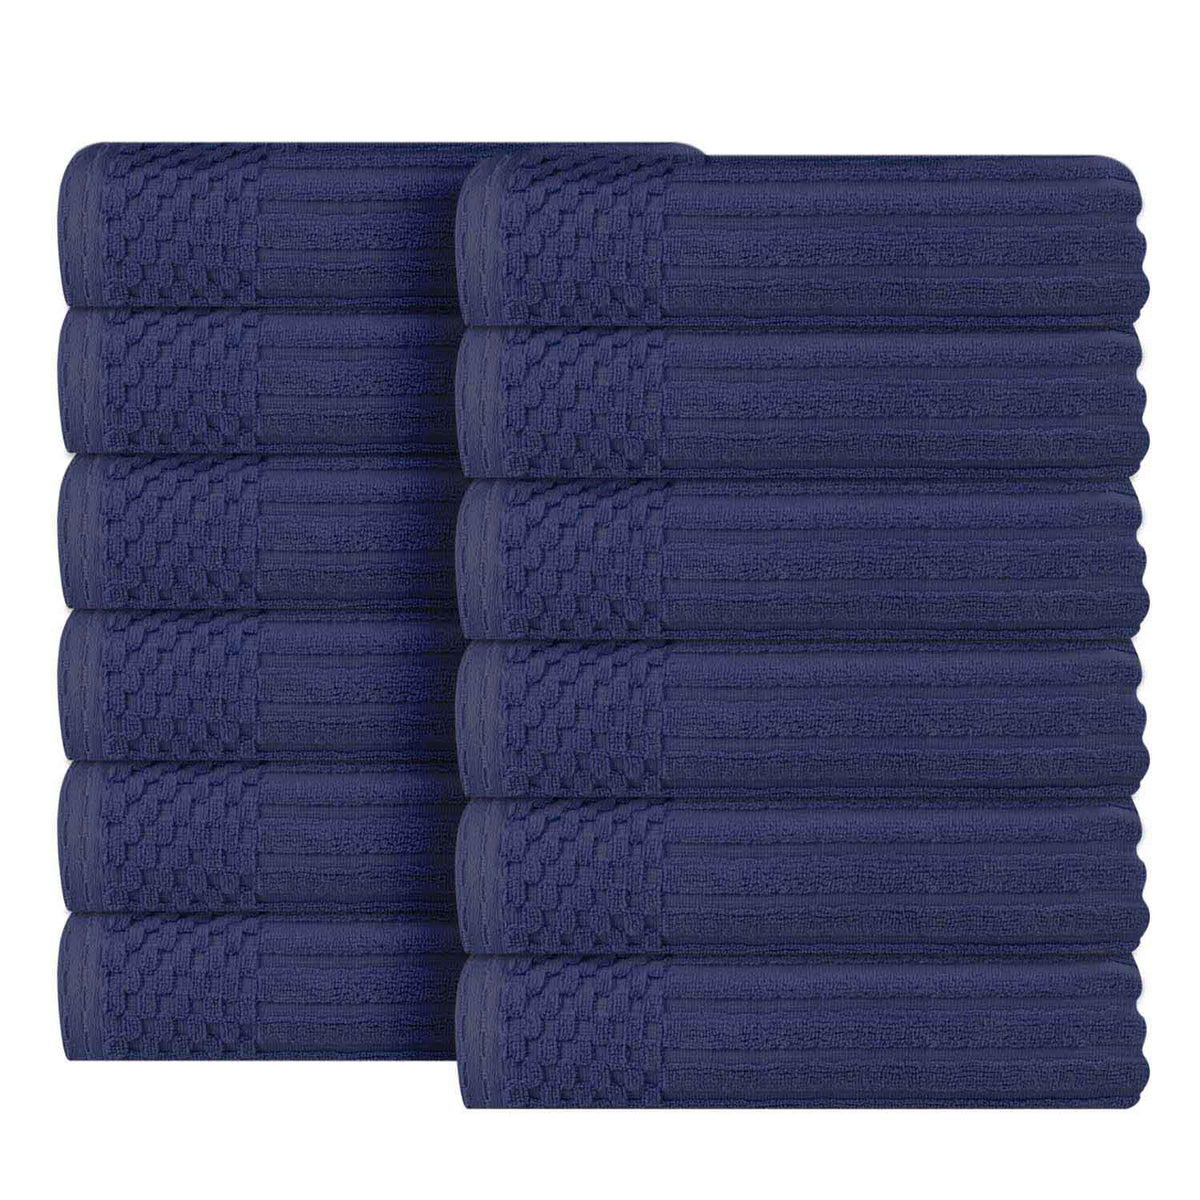 Soho Ribbed Cotton Absorbent Face Towel / Washcloth Set of 12 - NavyBlue